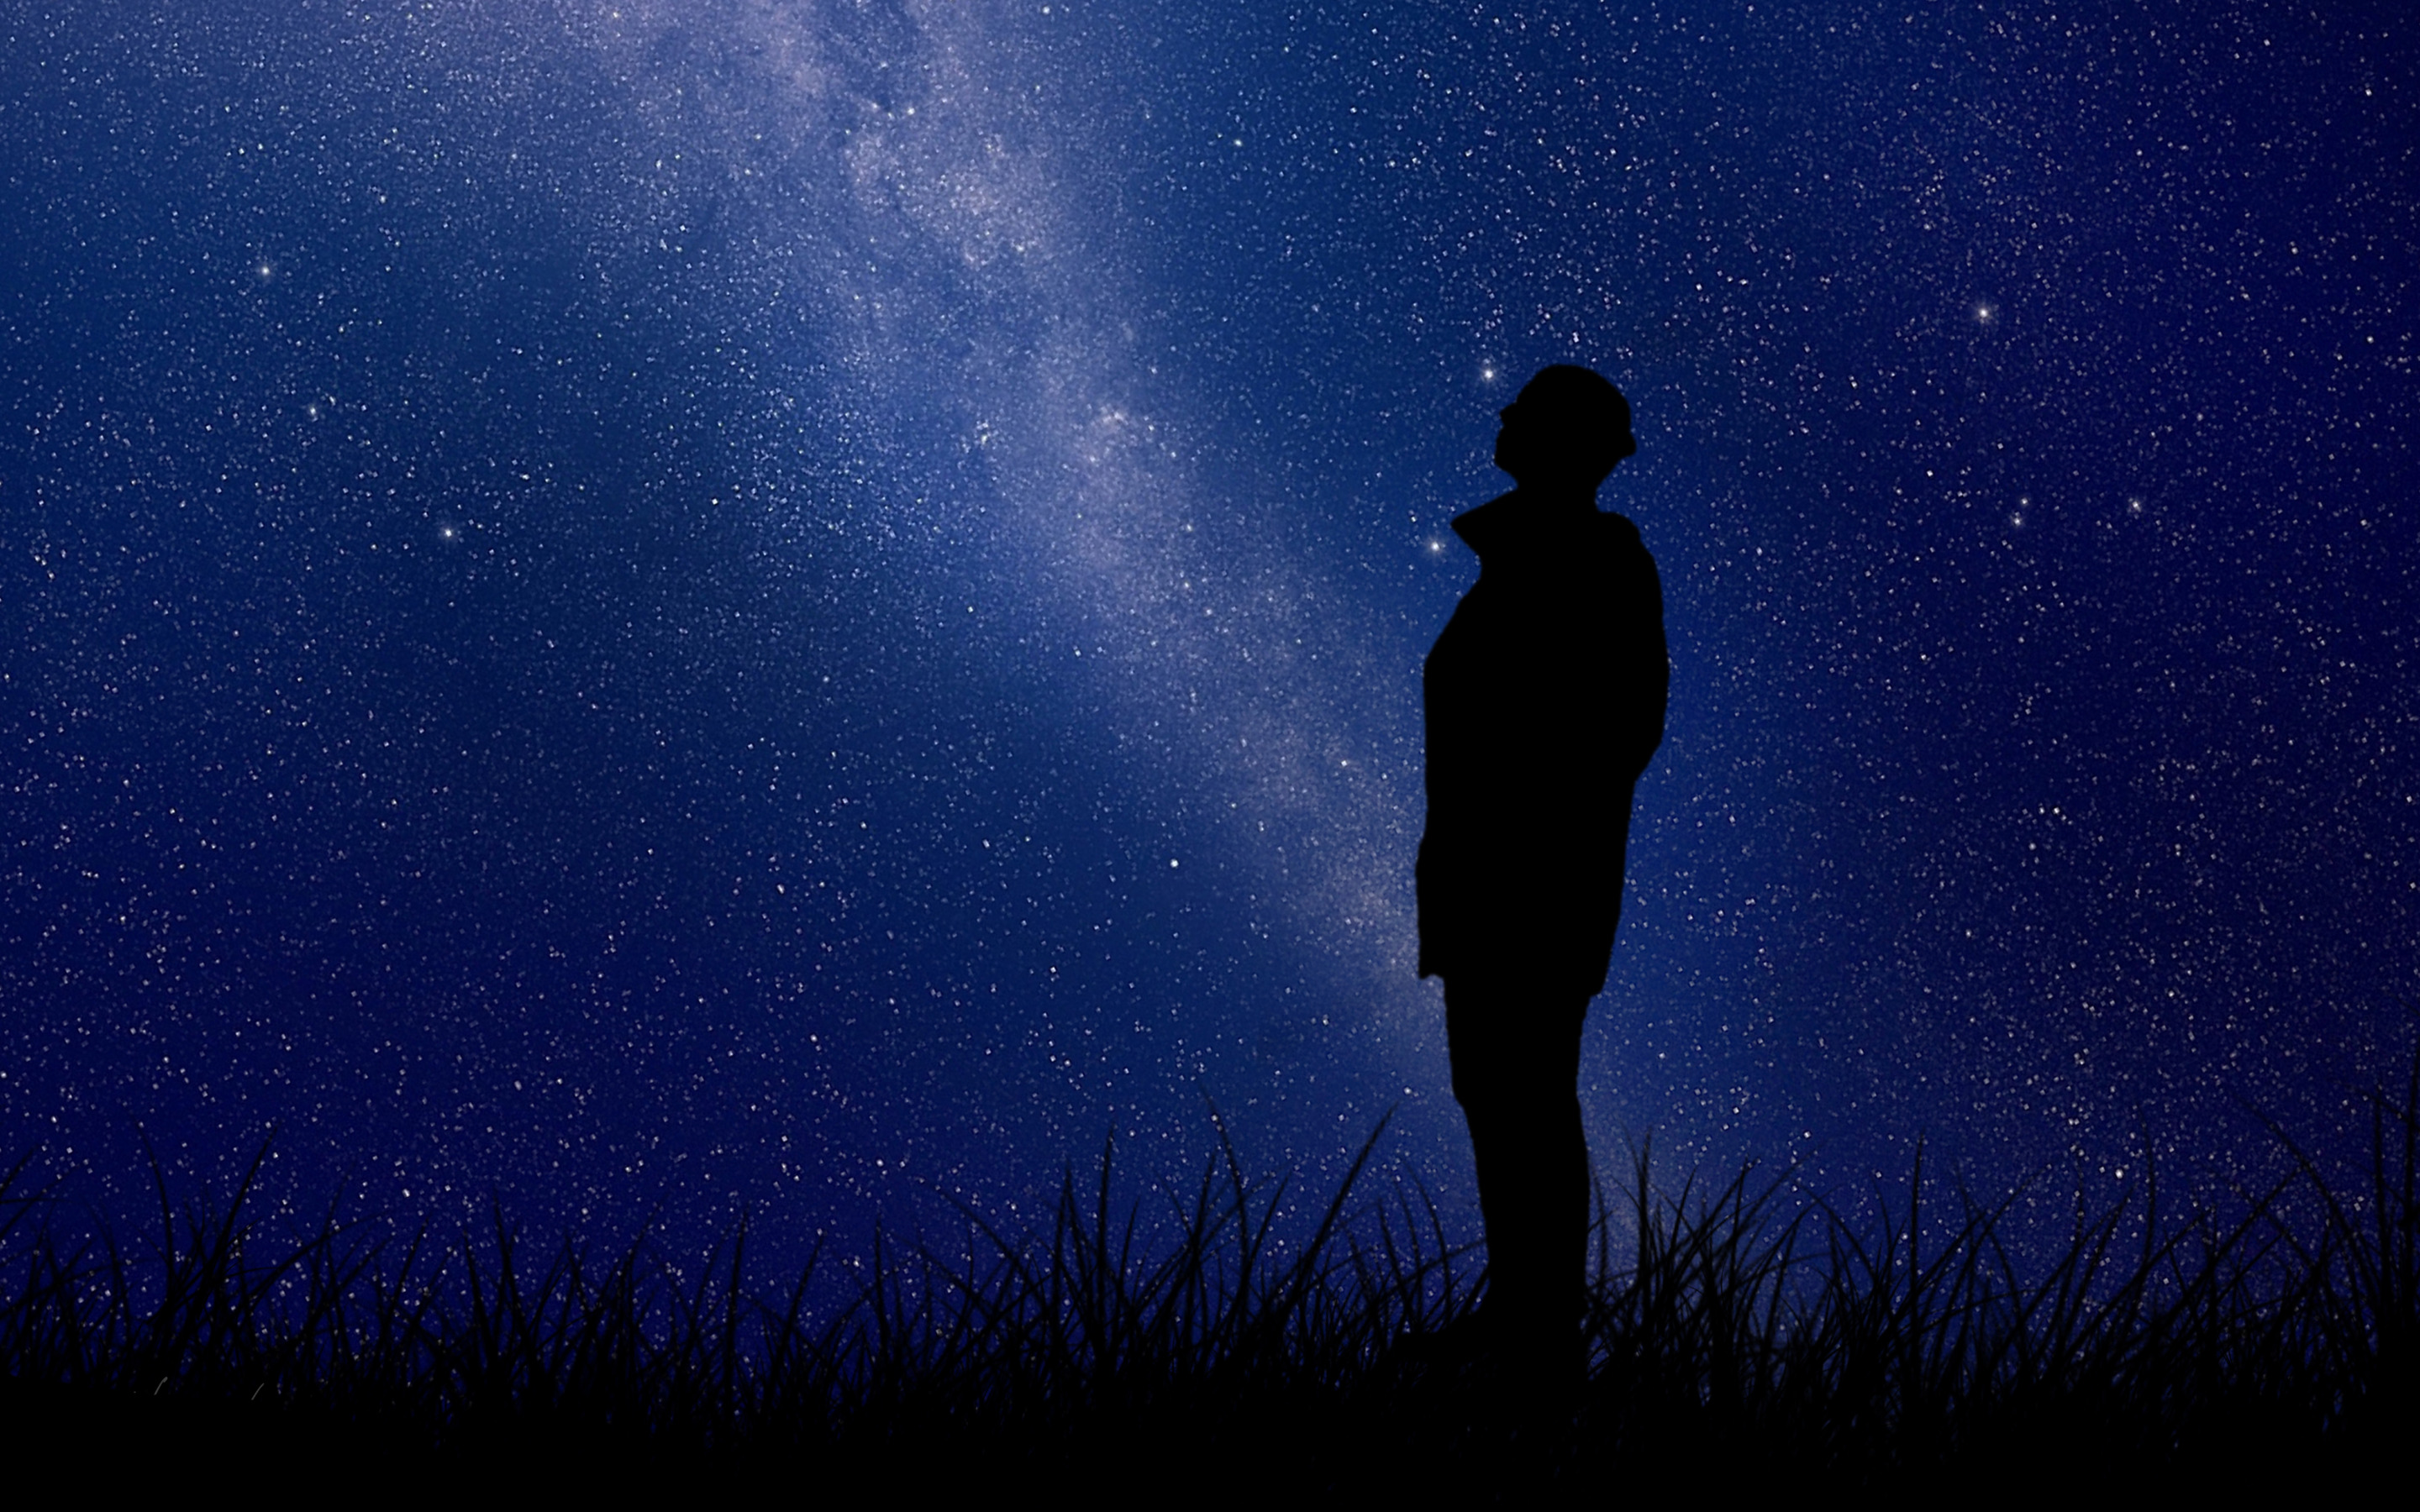 Starman waiting in the. Человек и ночное небо. Человек под звездным небом. Звездное небо и человек. Человек в ночи.